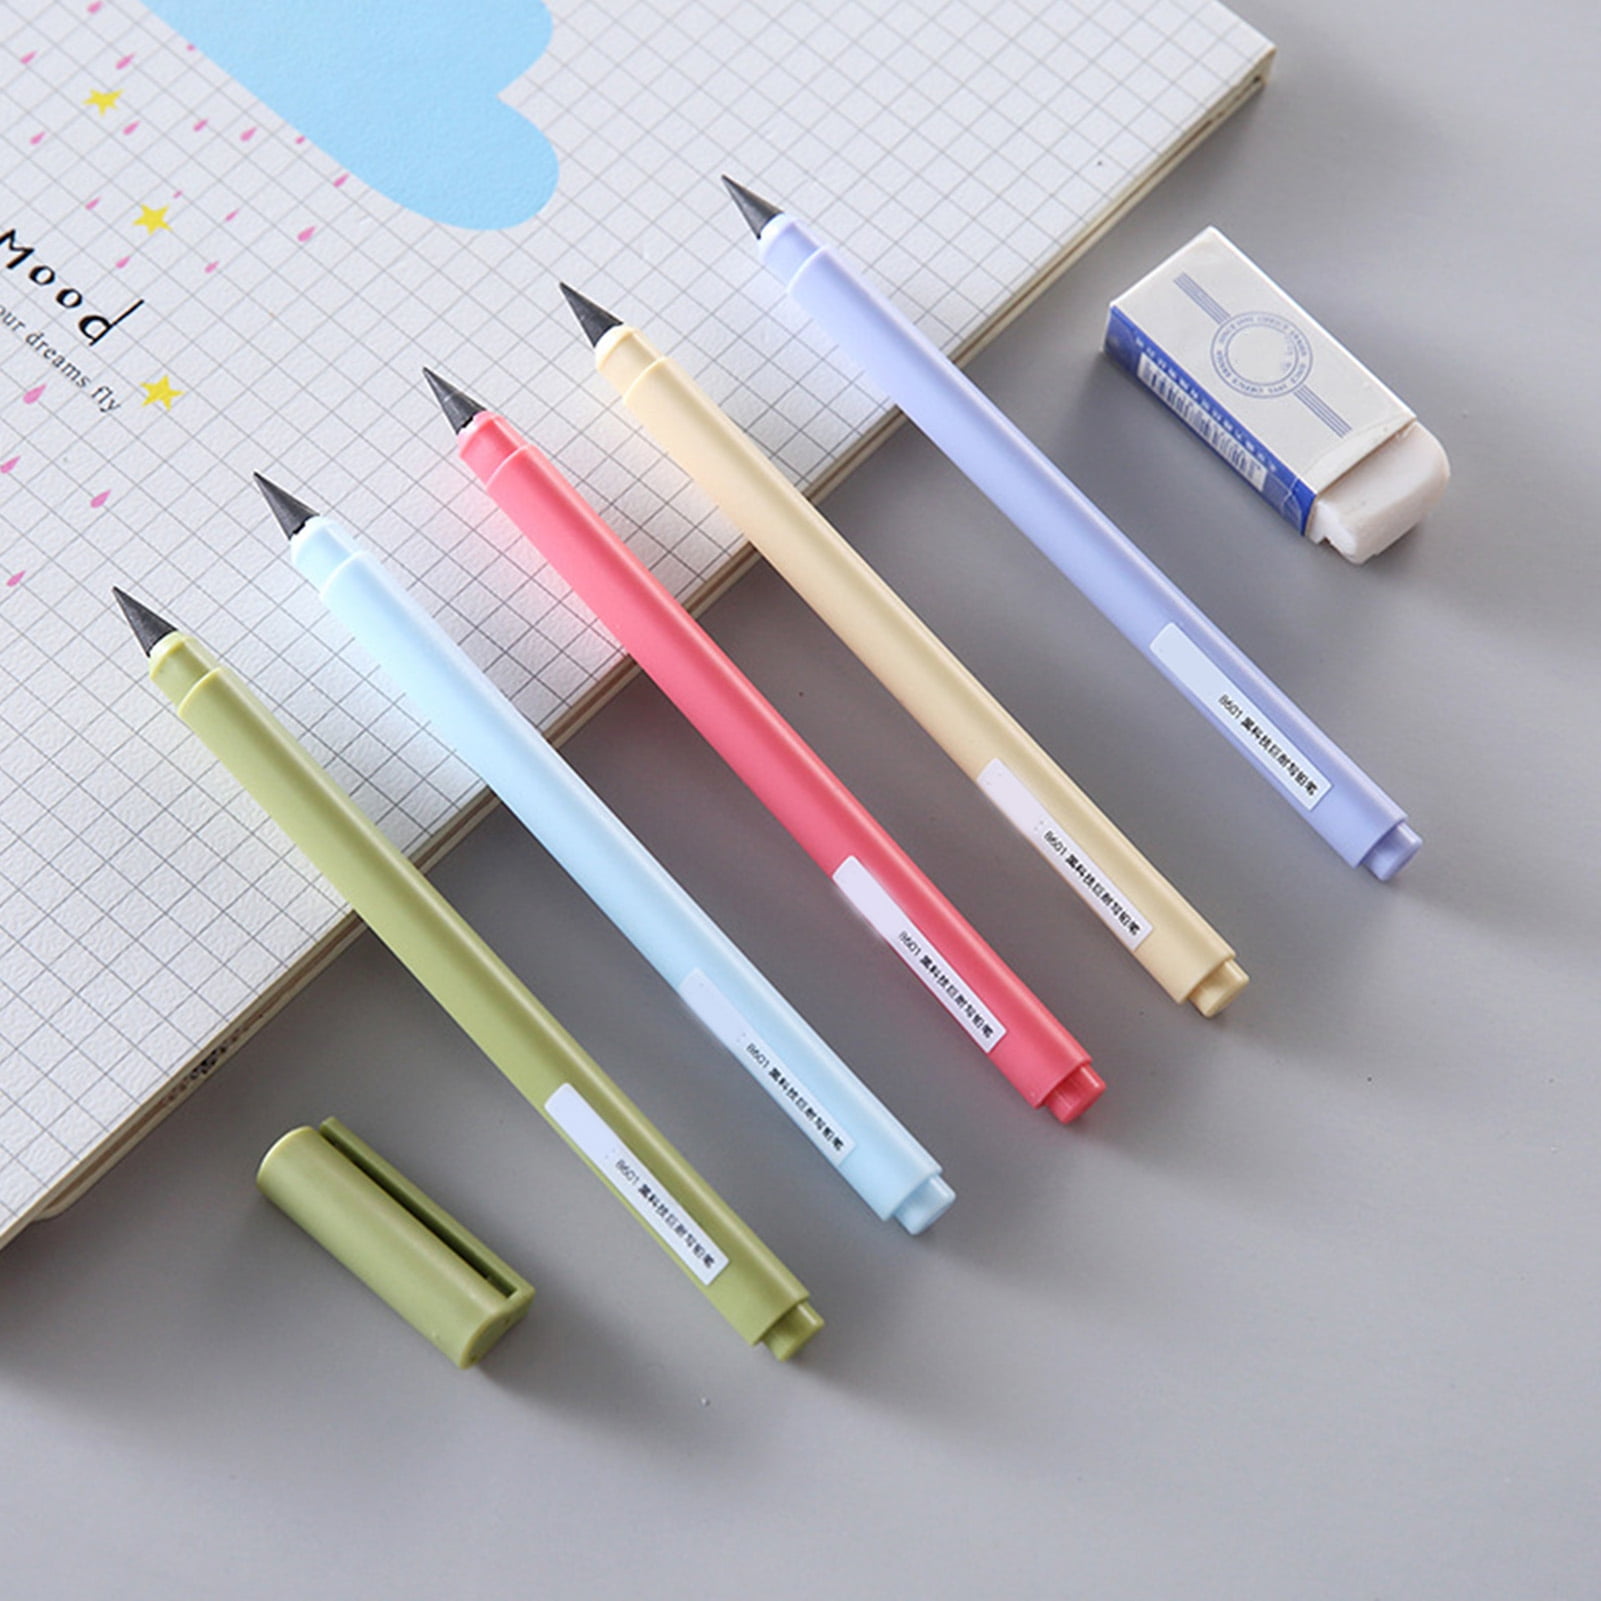  luzen 8 Pieces Soft Gel Rubber Pen Pencil Writing Aid Fits Most Writing  Utensils